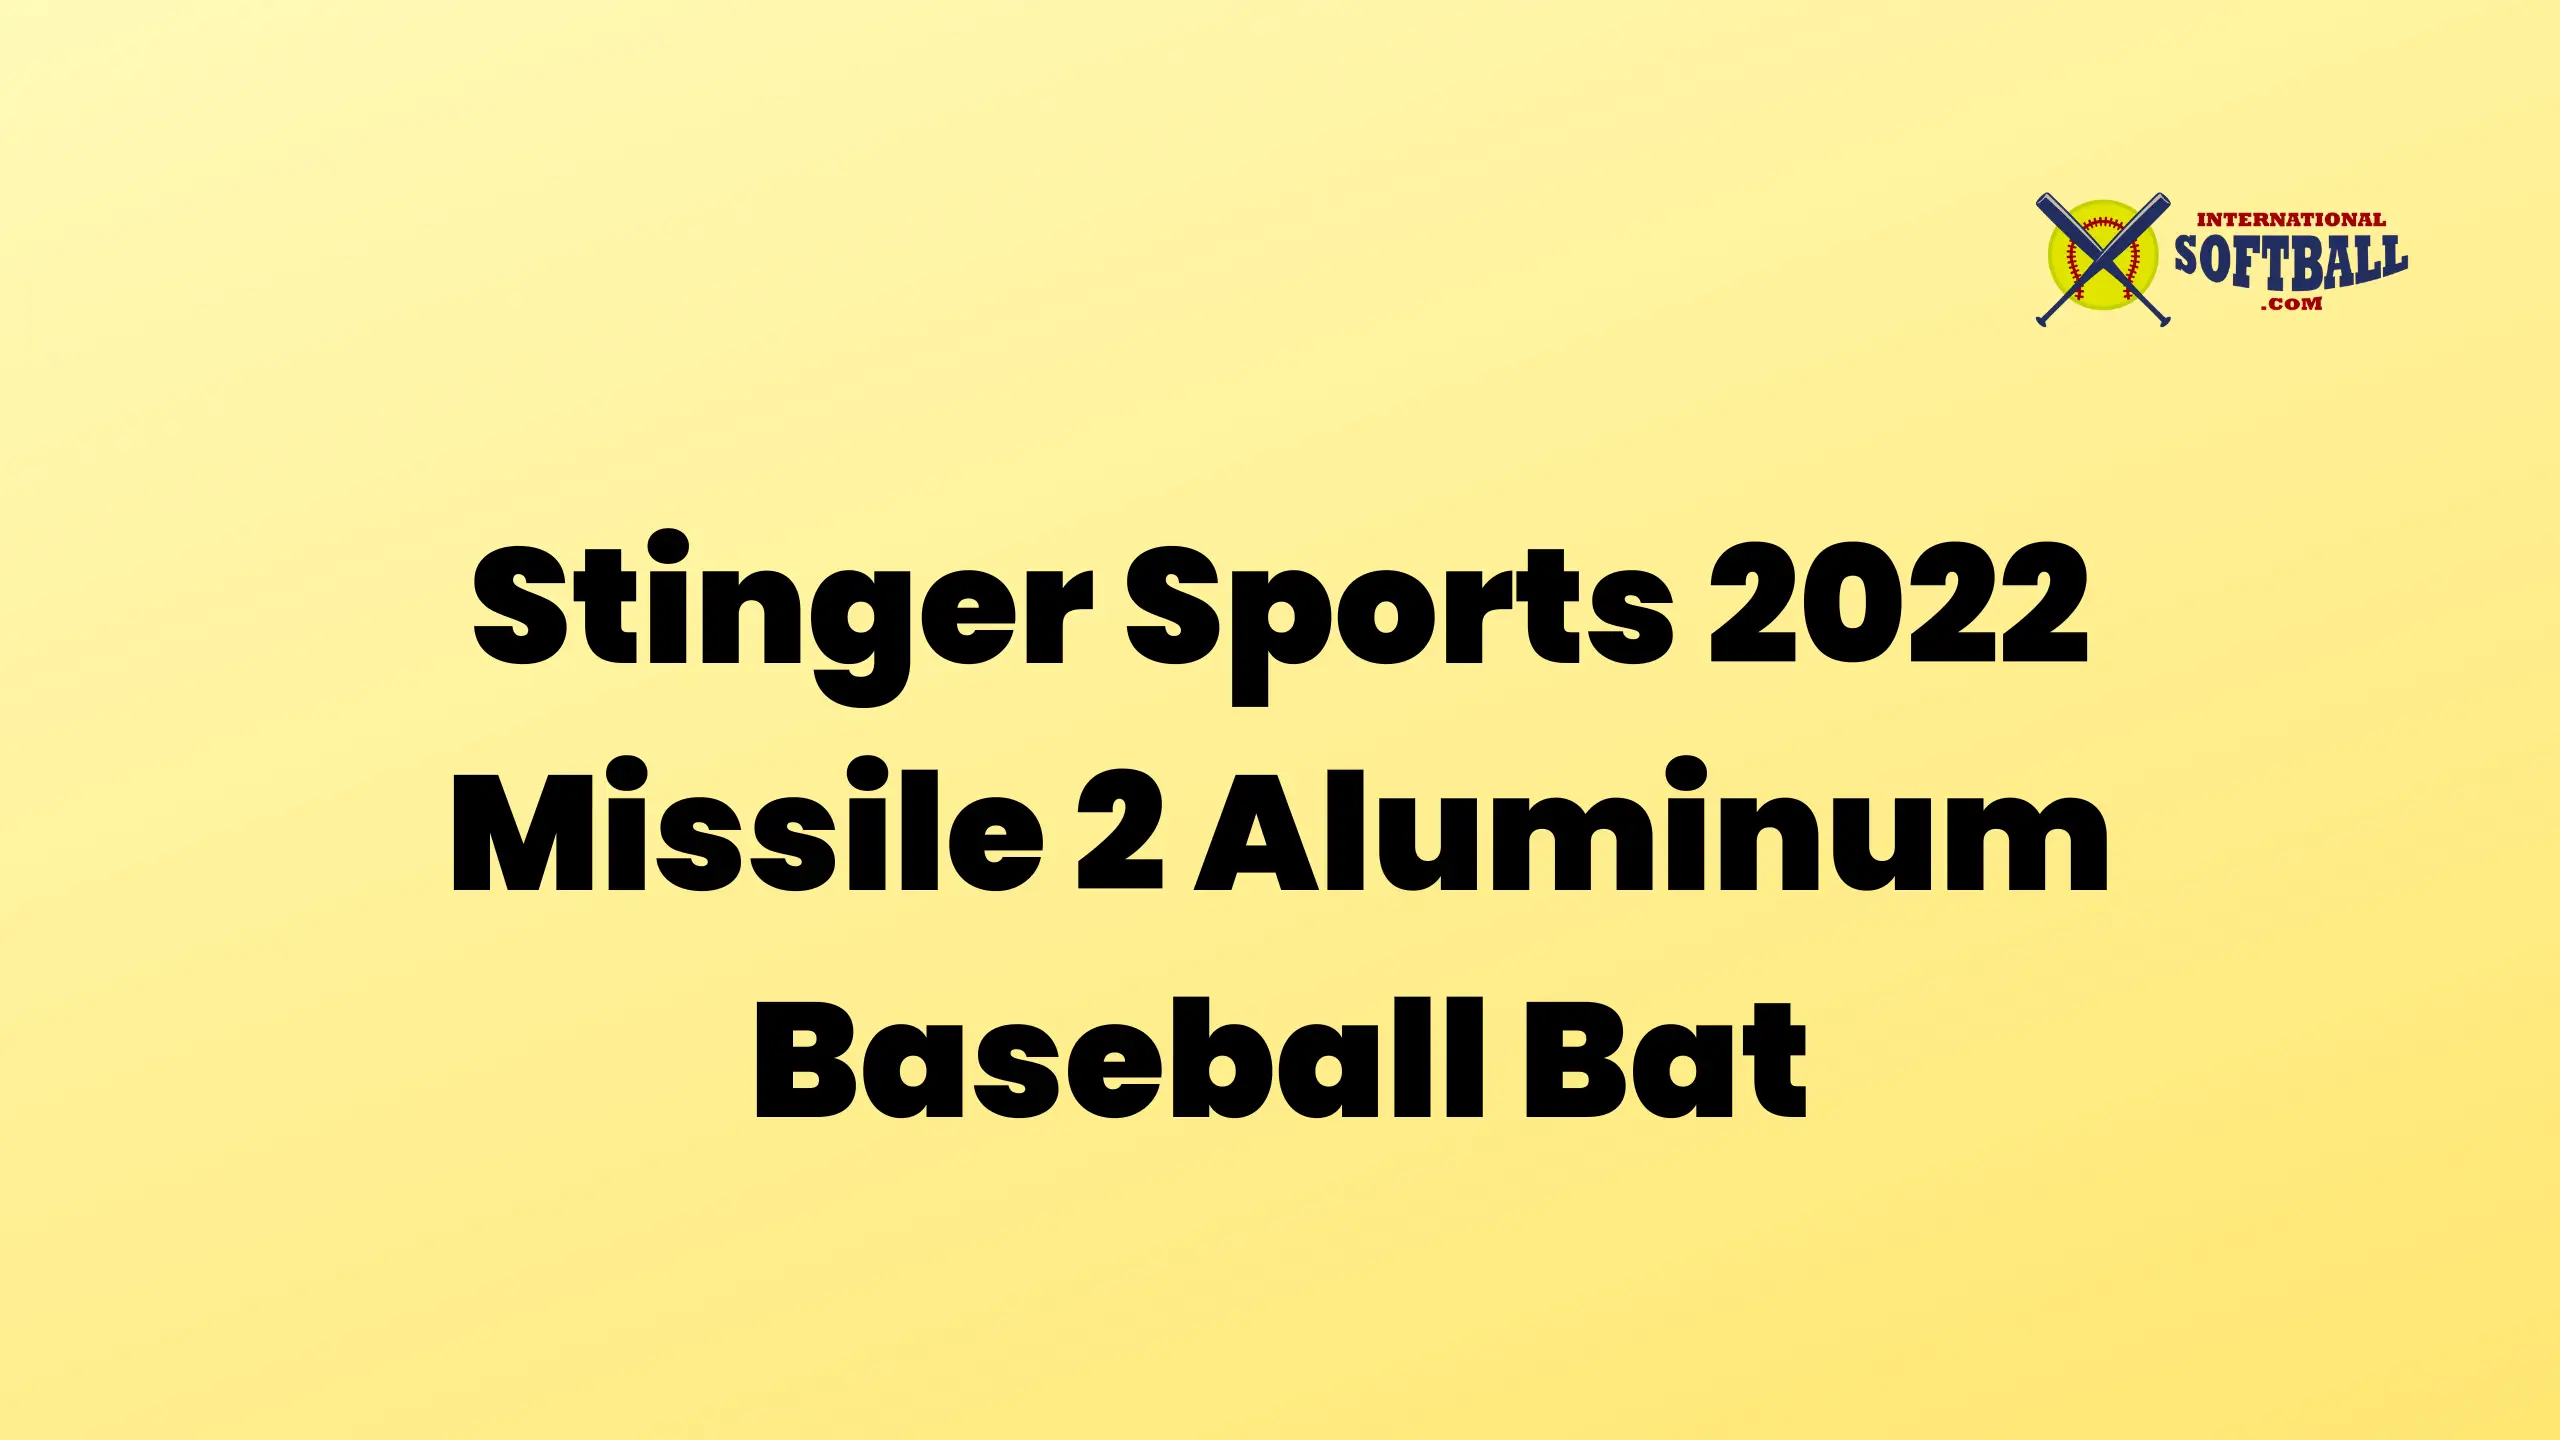 Stinger Sports 2022 Missile 2 Aluminum Baseball Bat